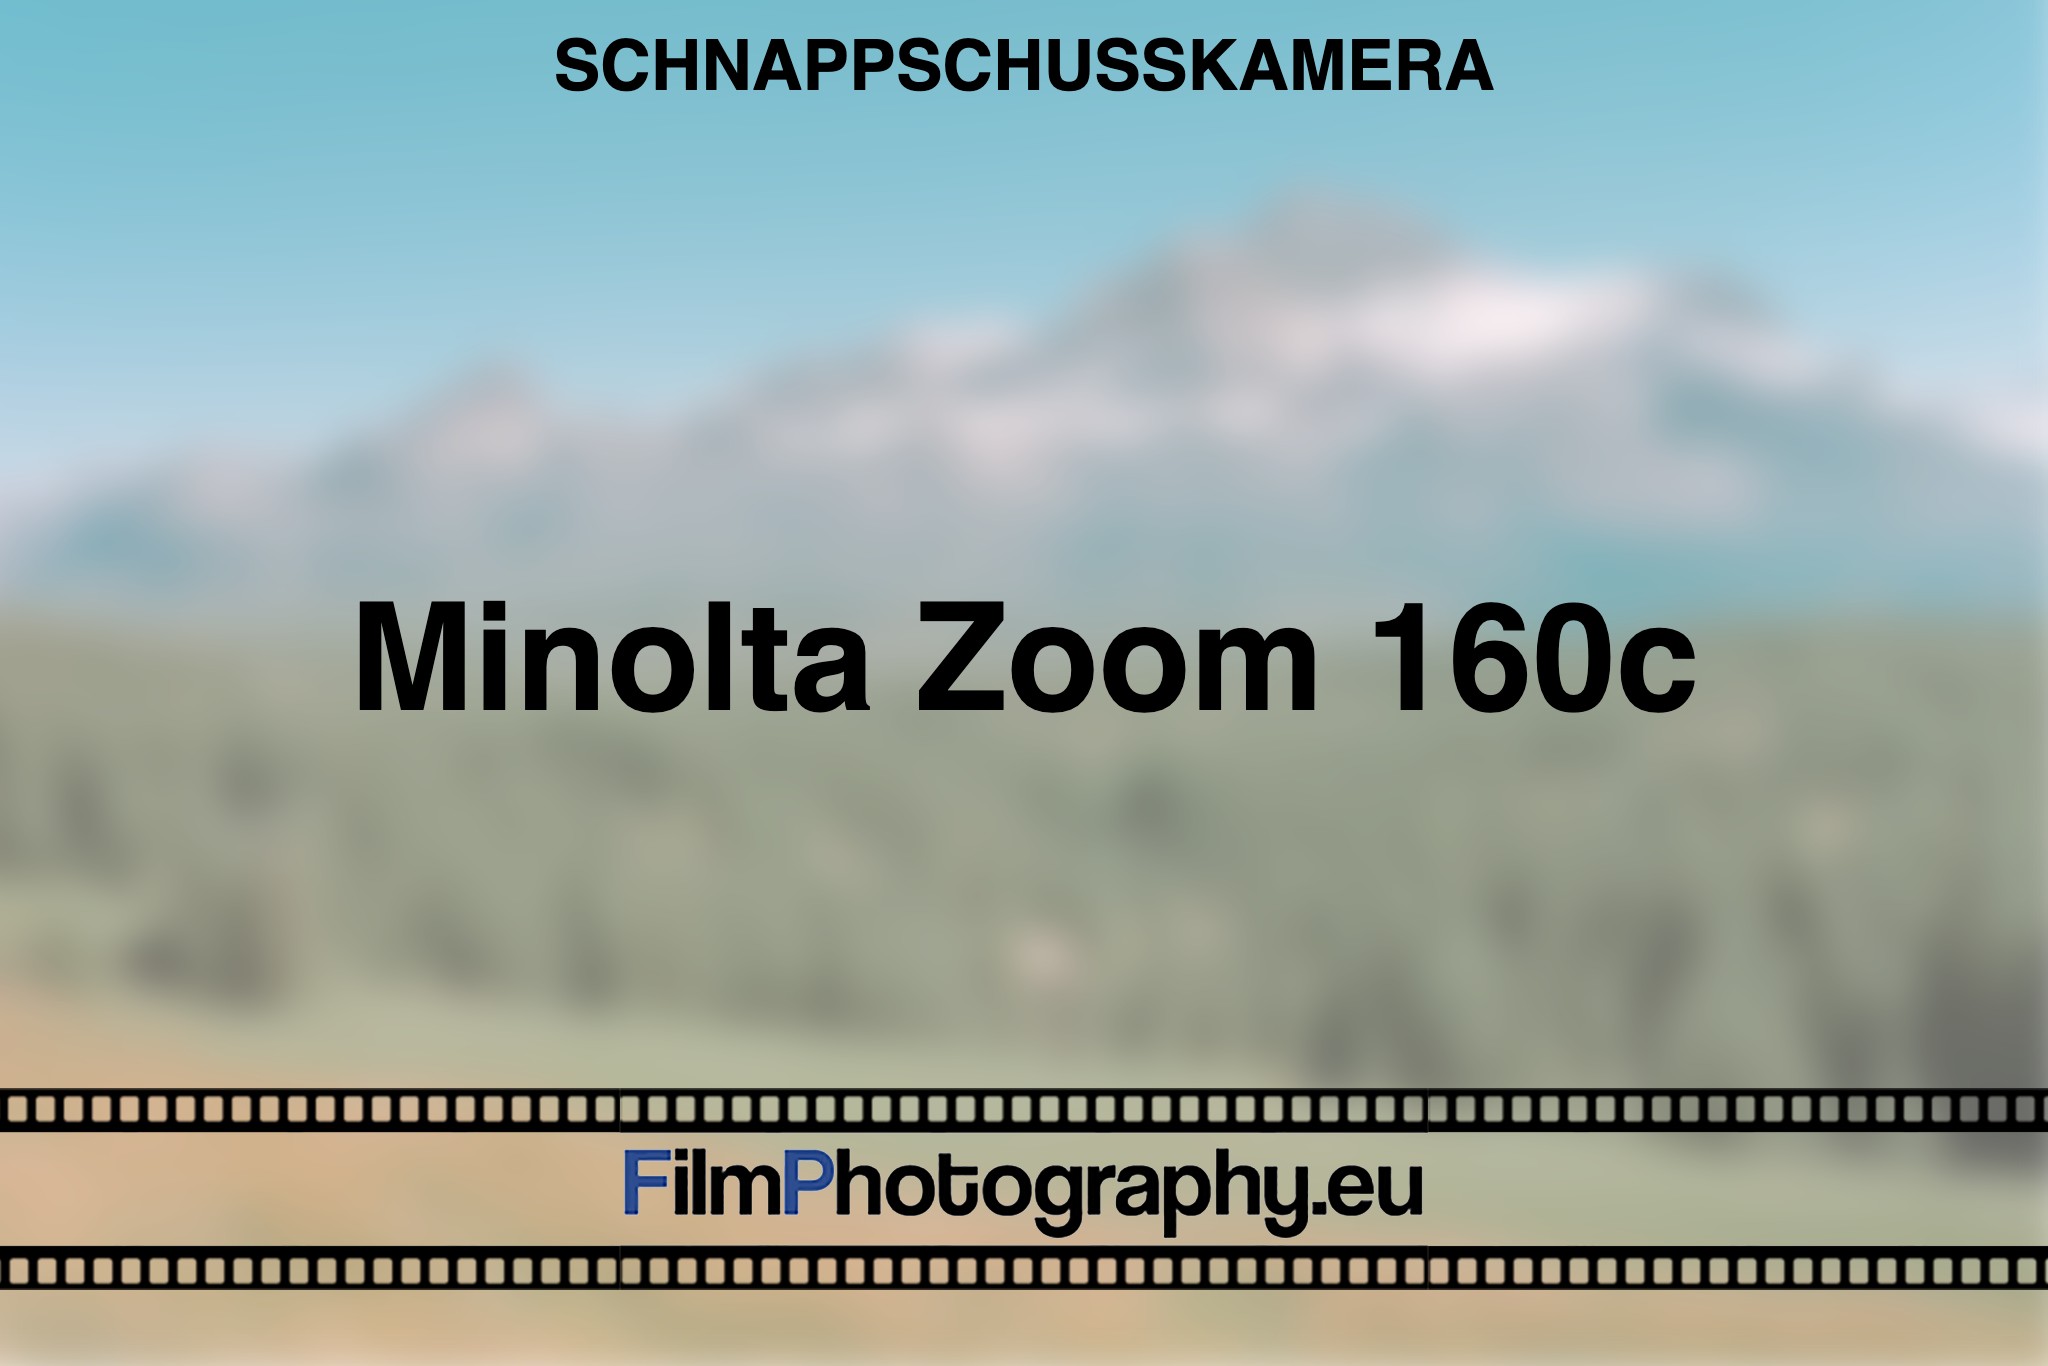 minolta-zoom-160c-schnappschusskamera-bnv